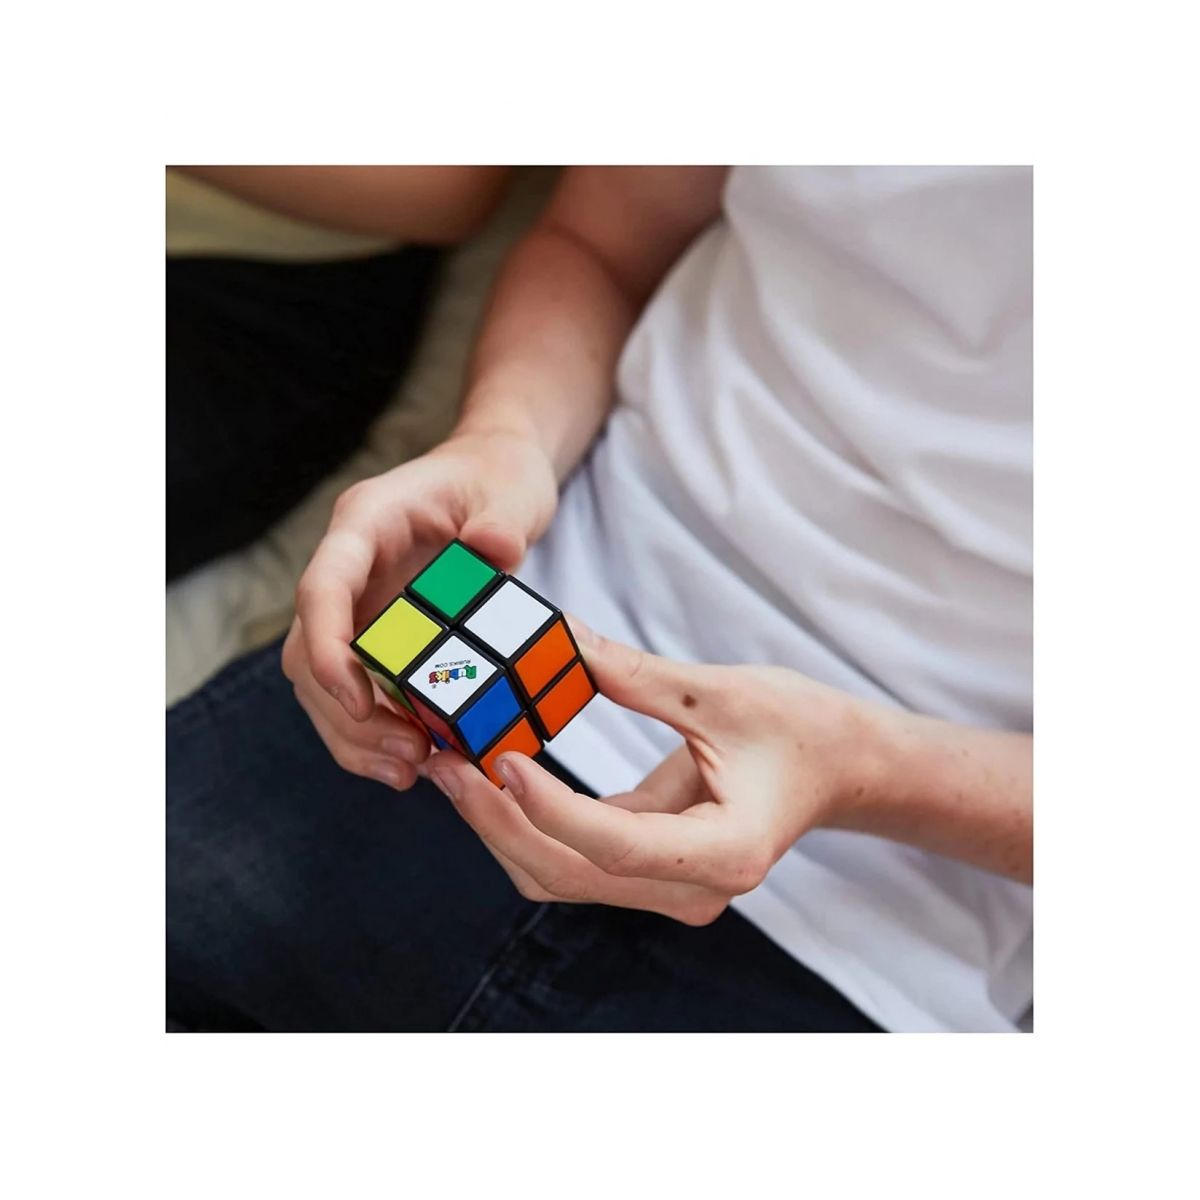 Układanka Spin Master Rubik Kostka 2x2 (6063963)